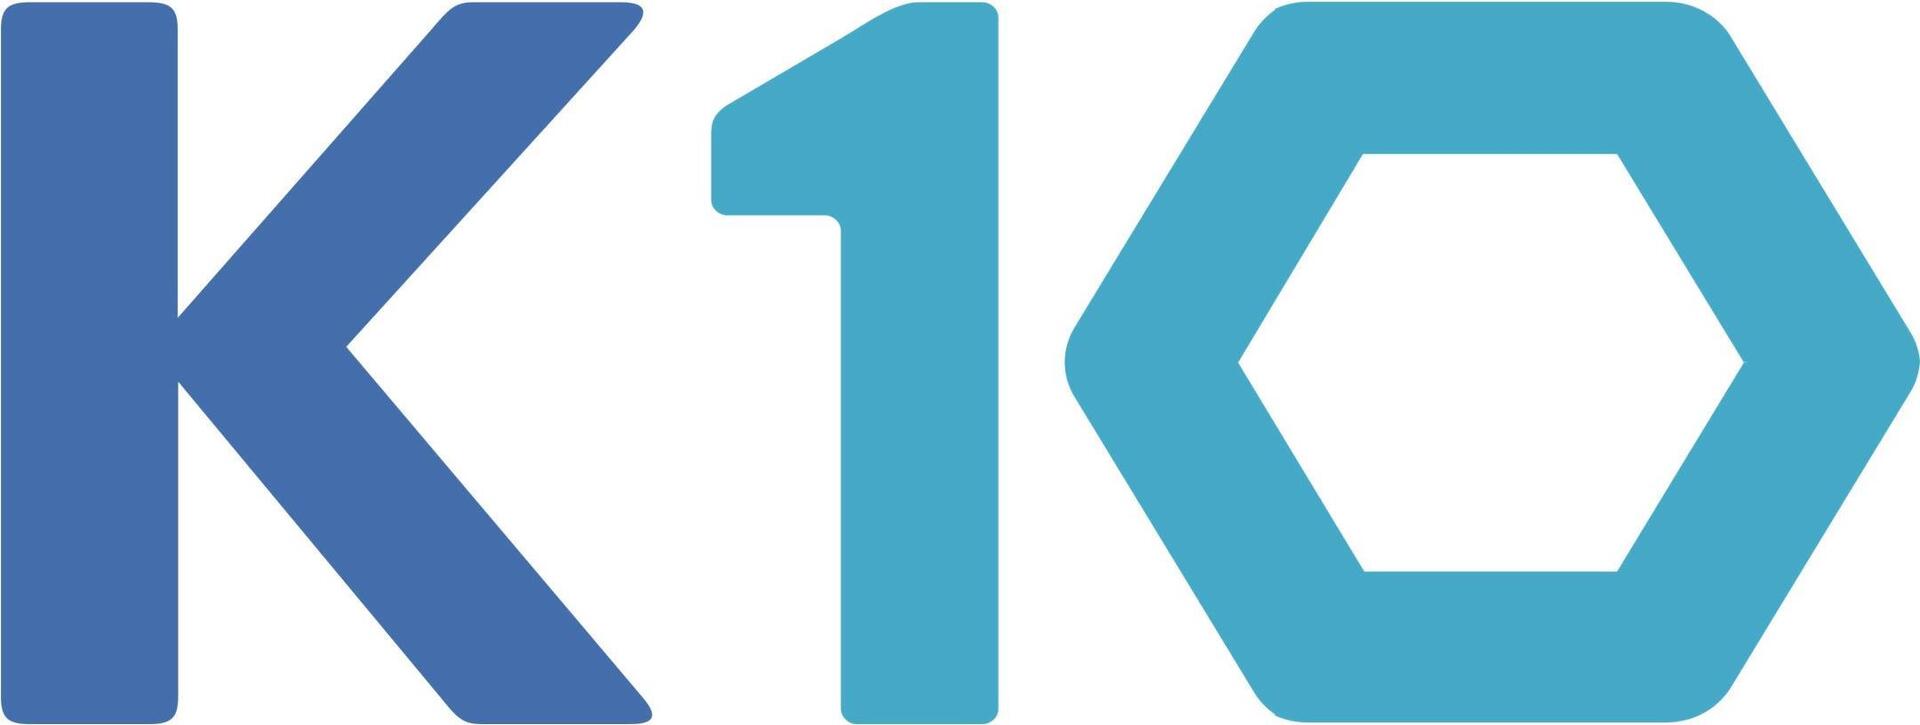 Veeam 1st Year Payment for renewing Kubernetes Backup and DR with Kasten by Veeam. Kasten K10 Enterprise Platform. 3 Years Subscription Annual Billing & Kasten Basic Support. (V-K10ENT-0N-SA3R1-00)